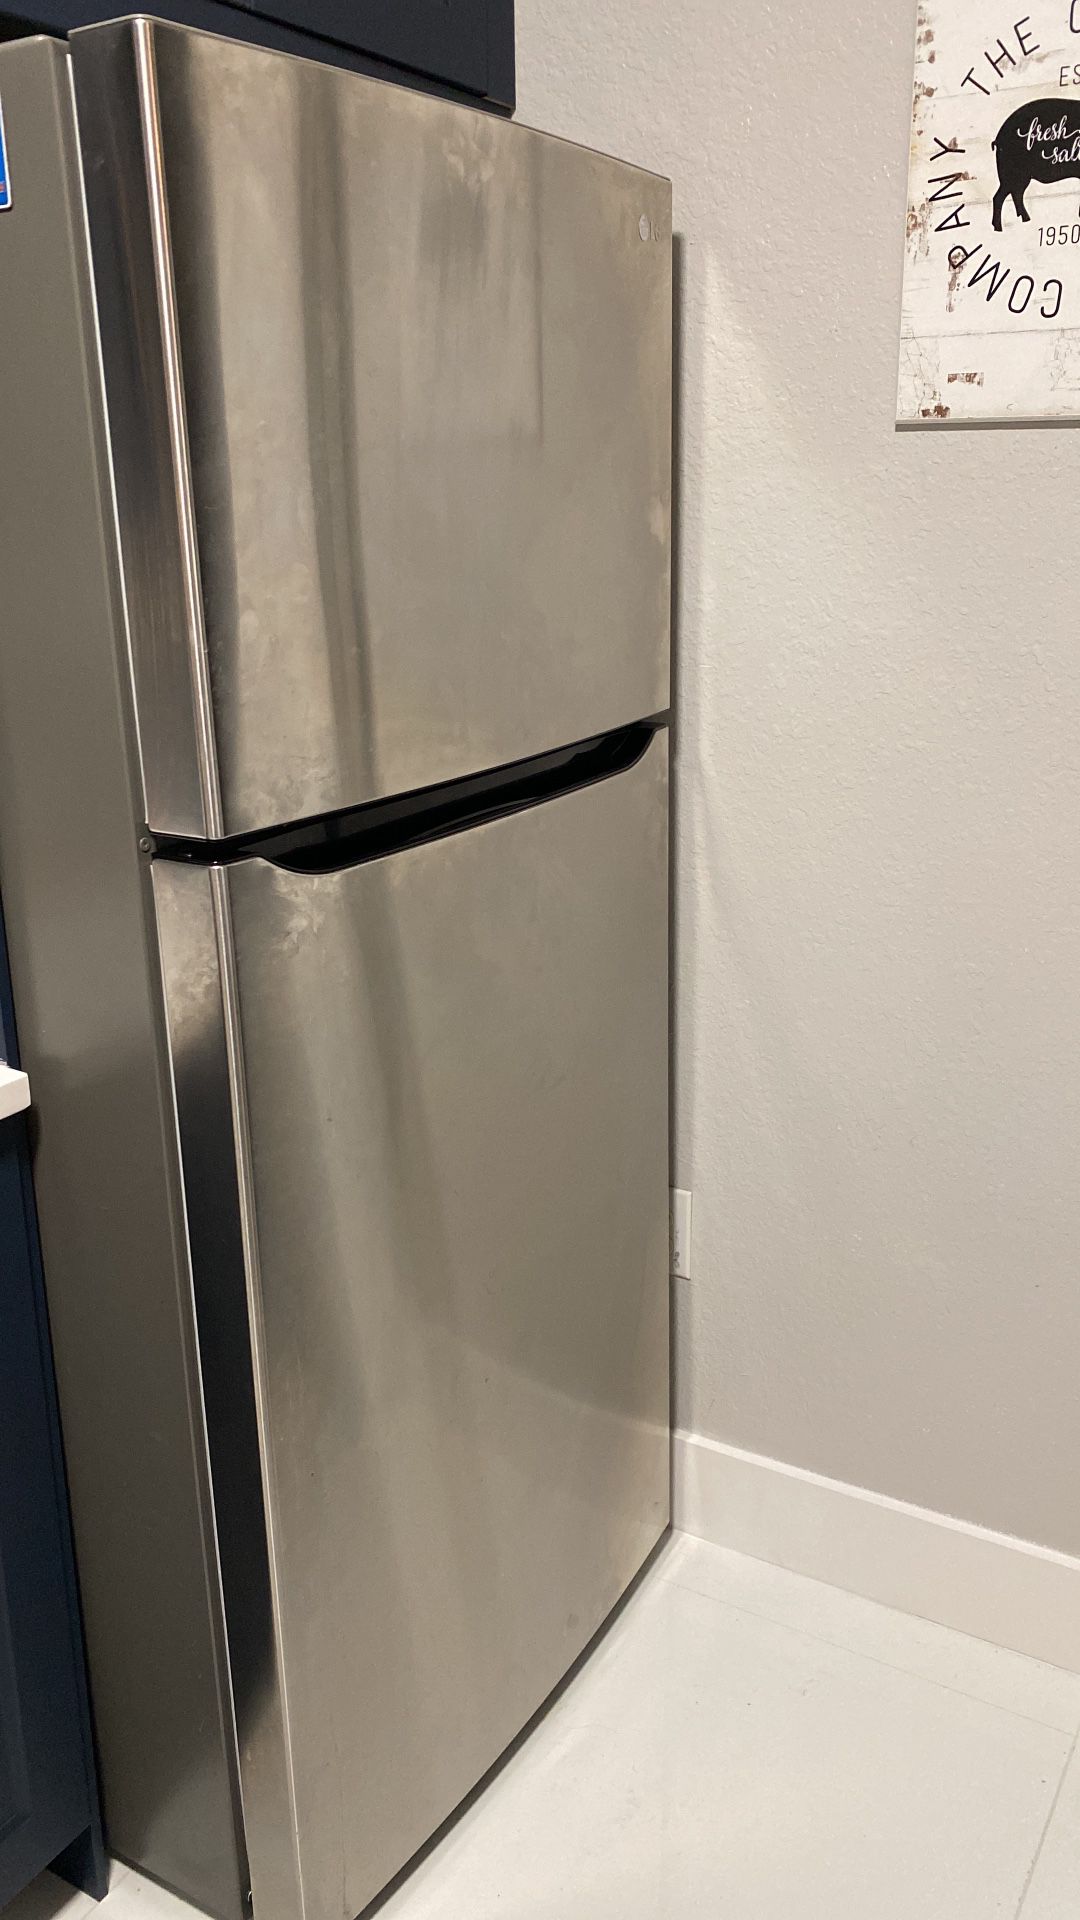 LG Newer Top Freezer Refrigerator Ice Maker